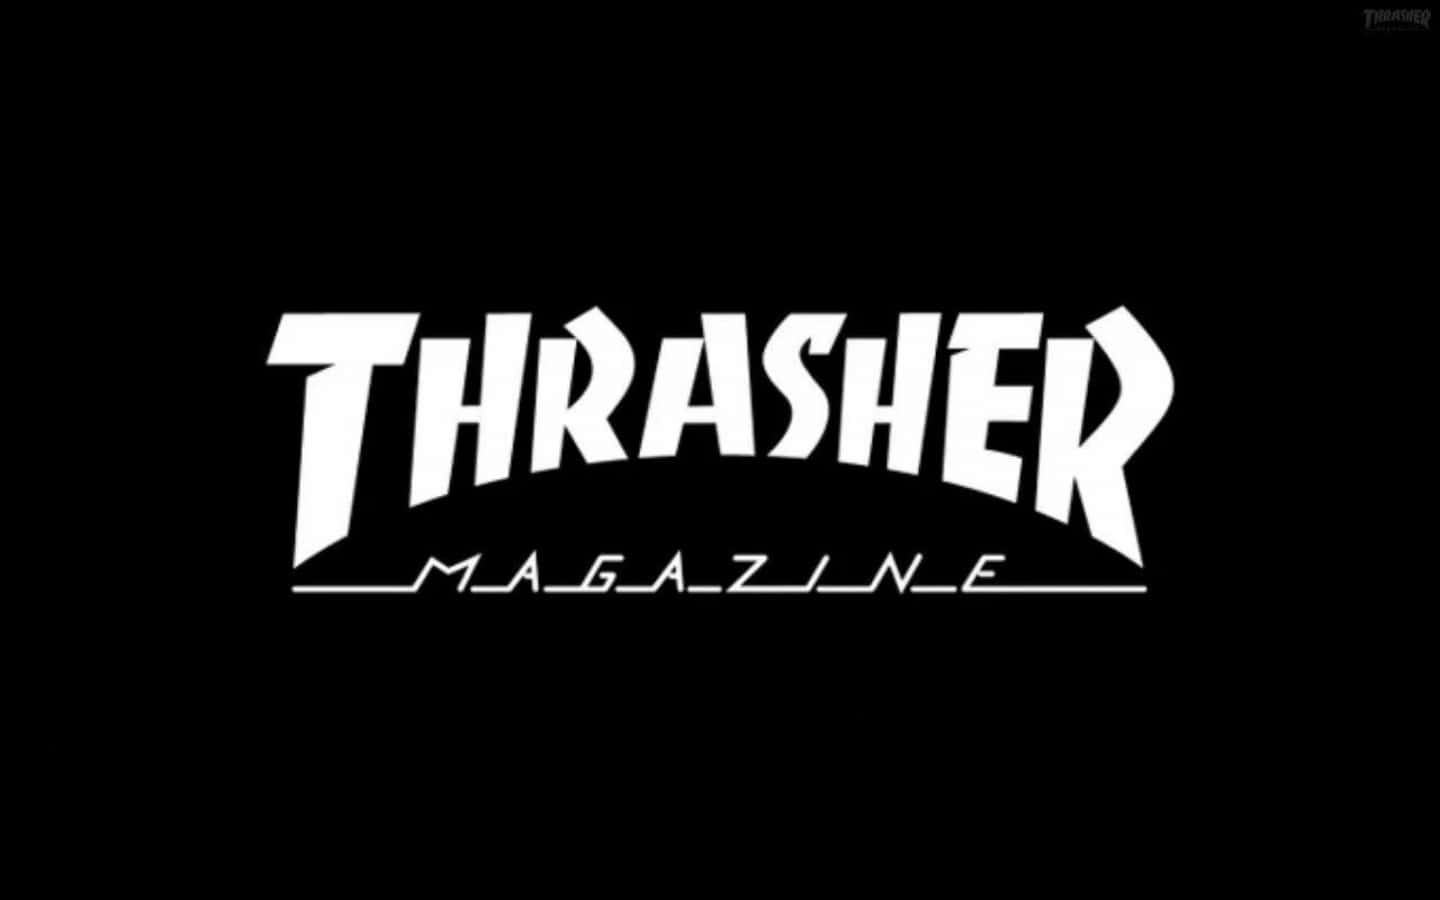 Thrashermagazine-logo På En Sort Baggrund.